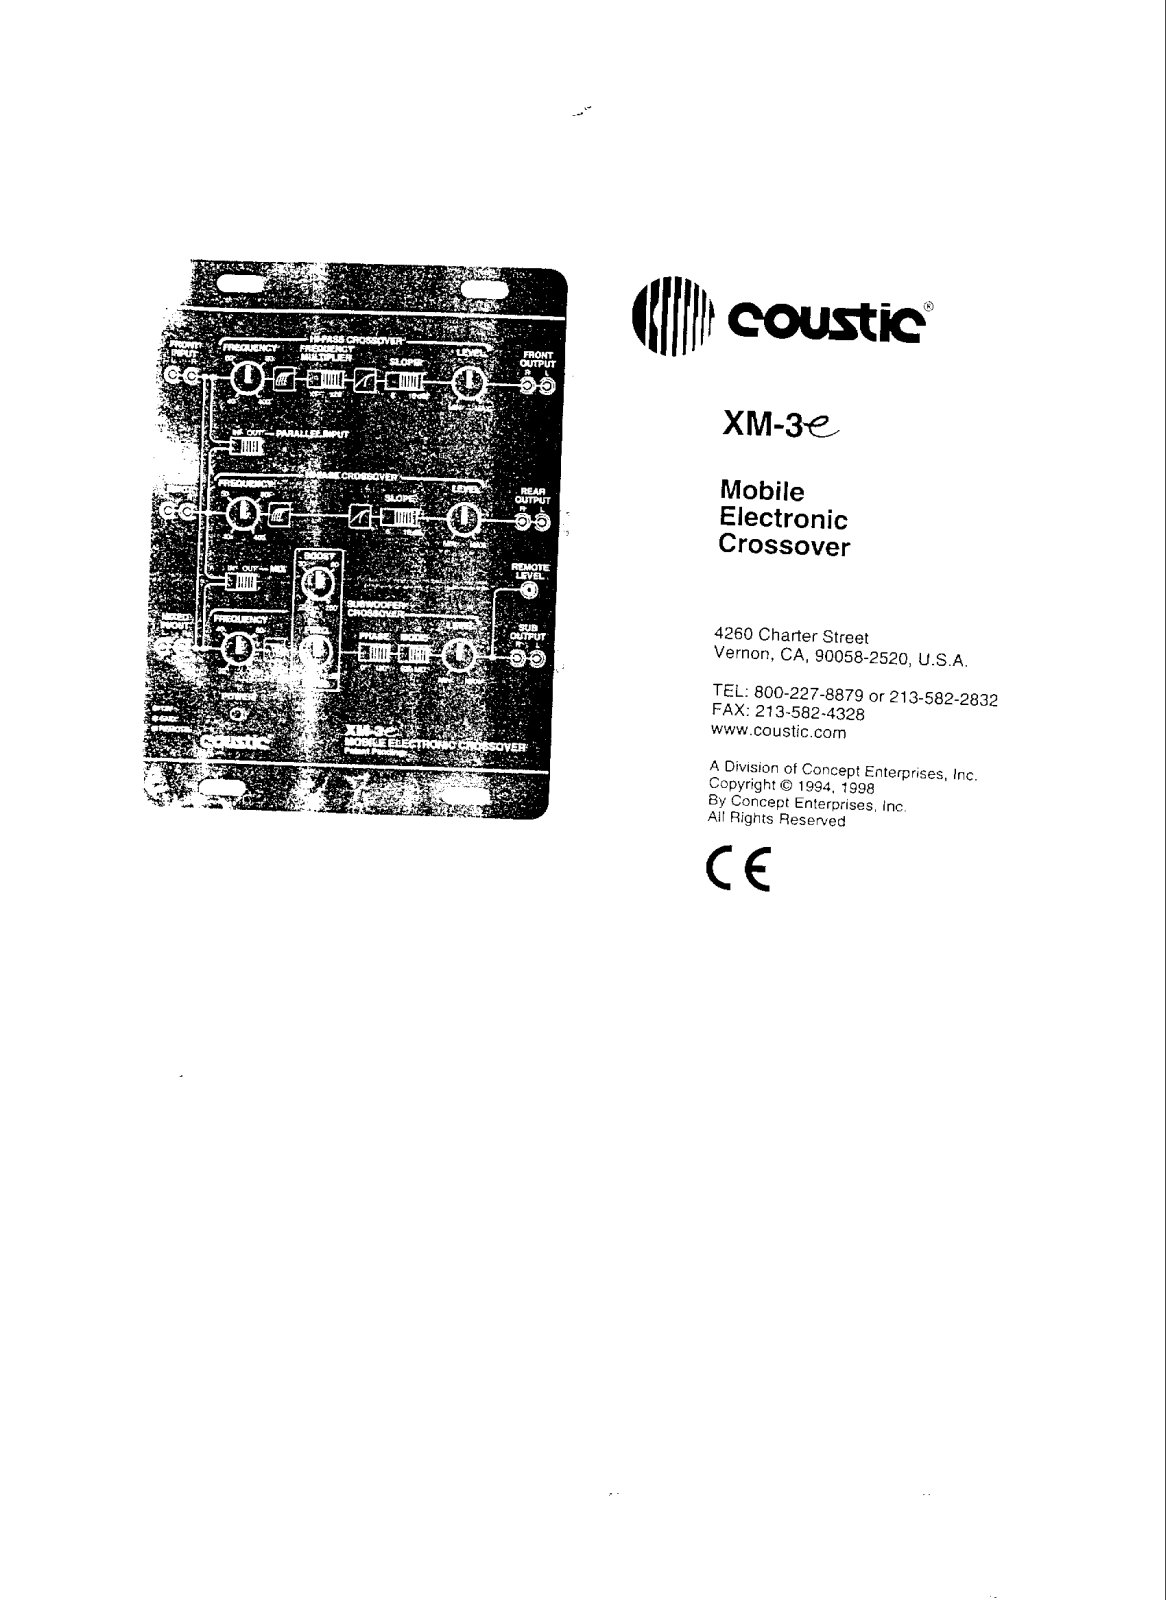 Coustic XM-3e Instruction Manual